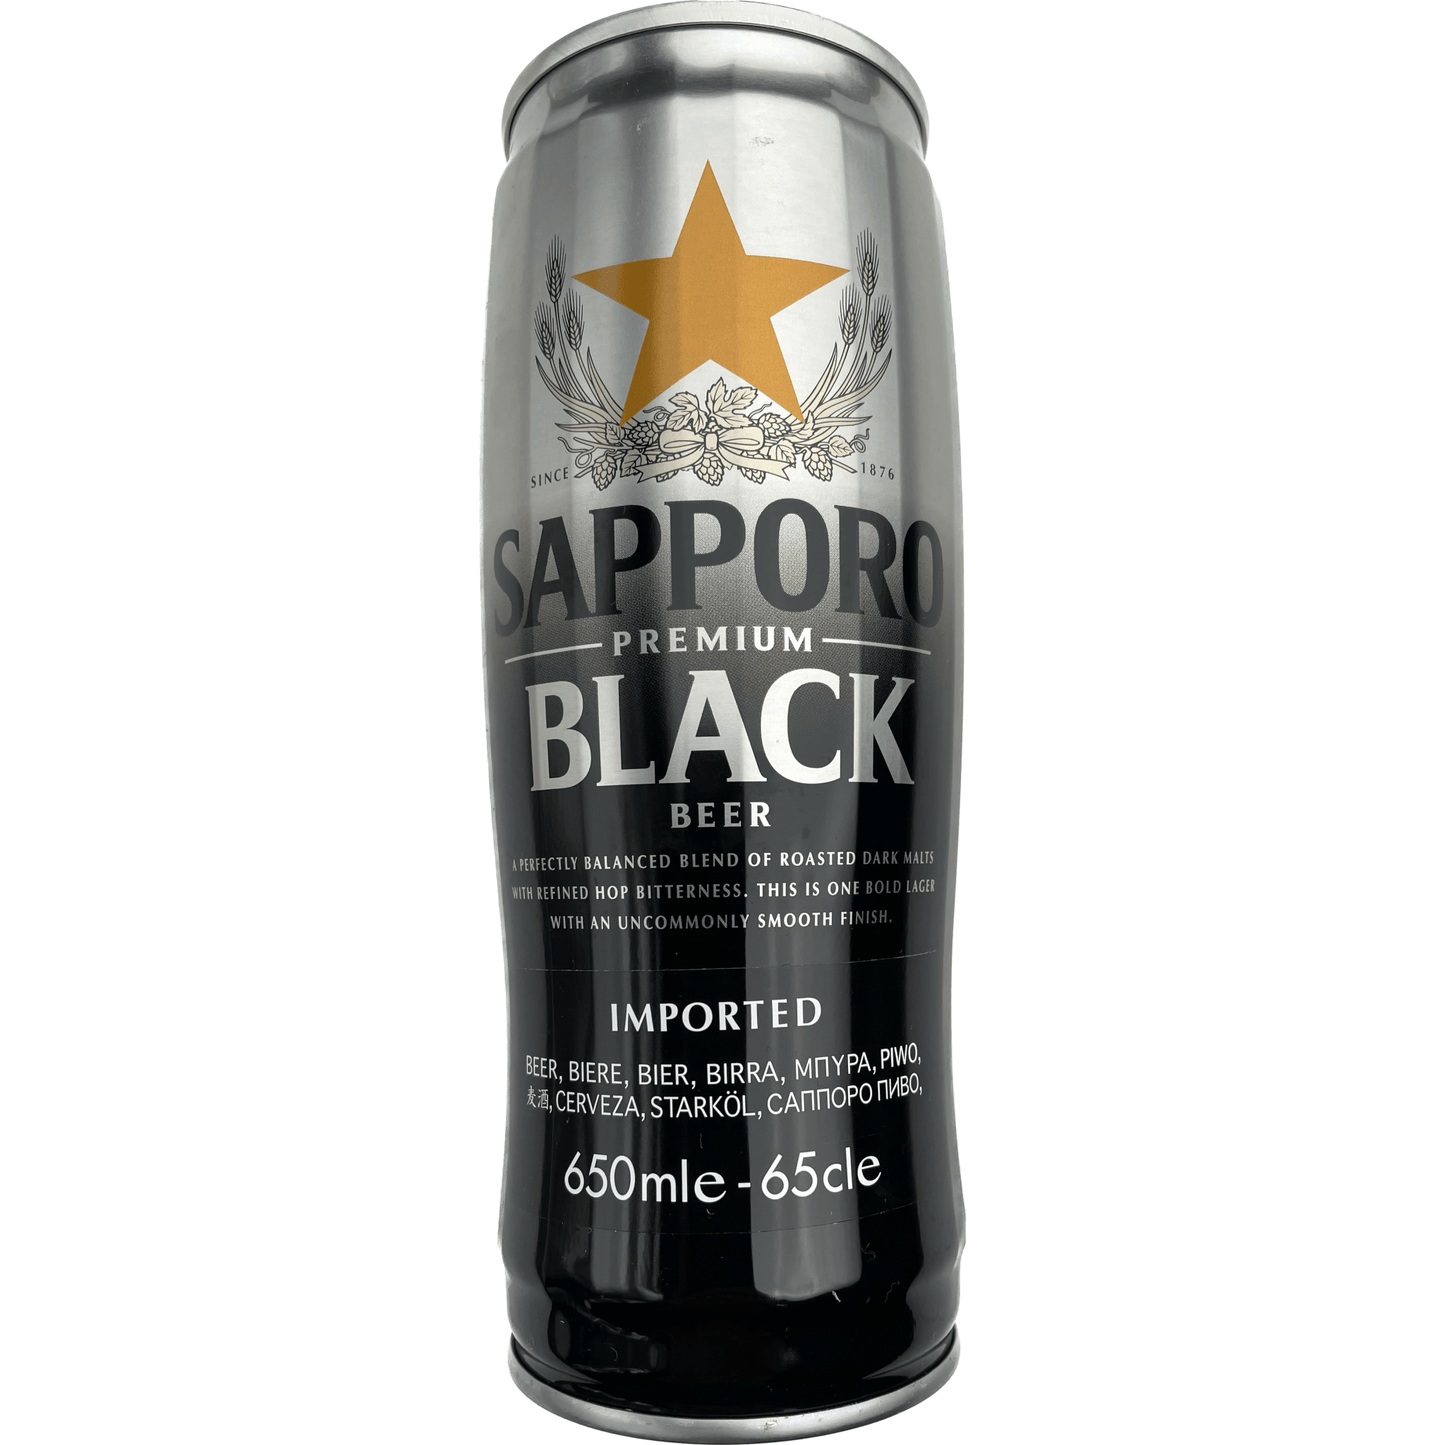 Sapporo Premium Black Beer 650ml can / サッポロ プレミアムブラックビール 650ml缶 - RiceWineShop